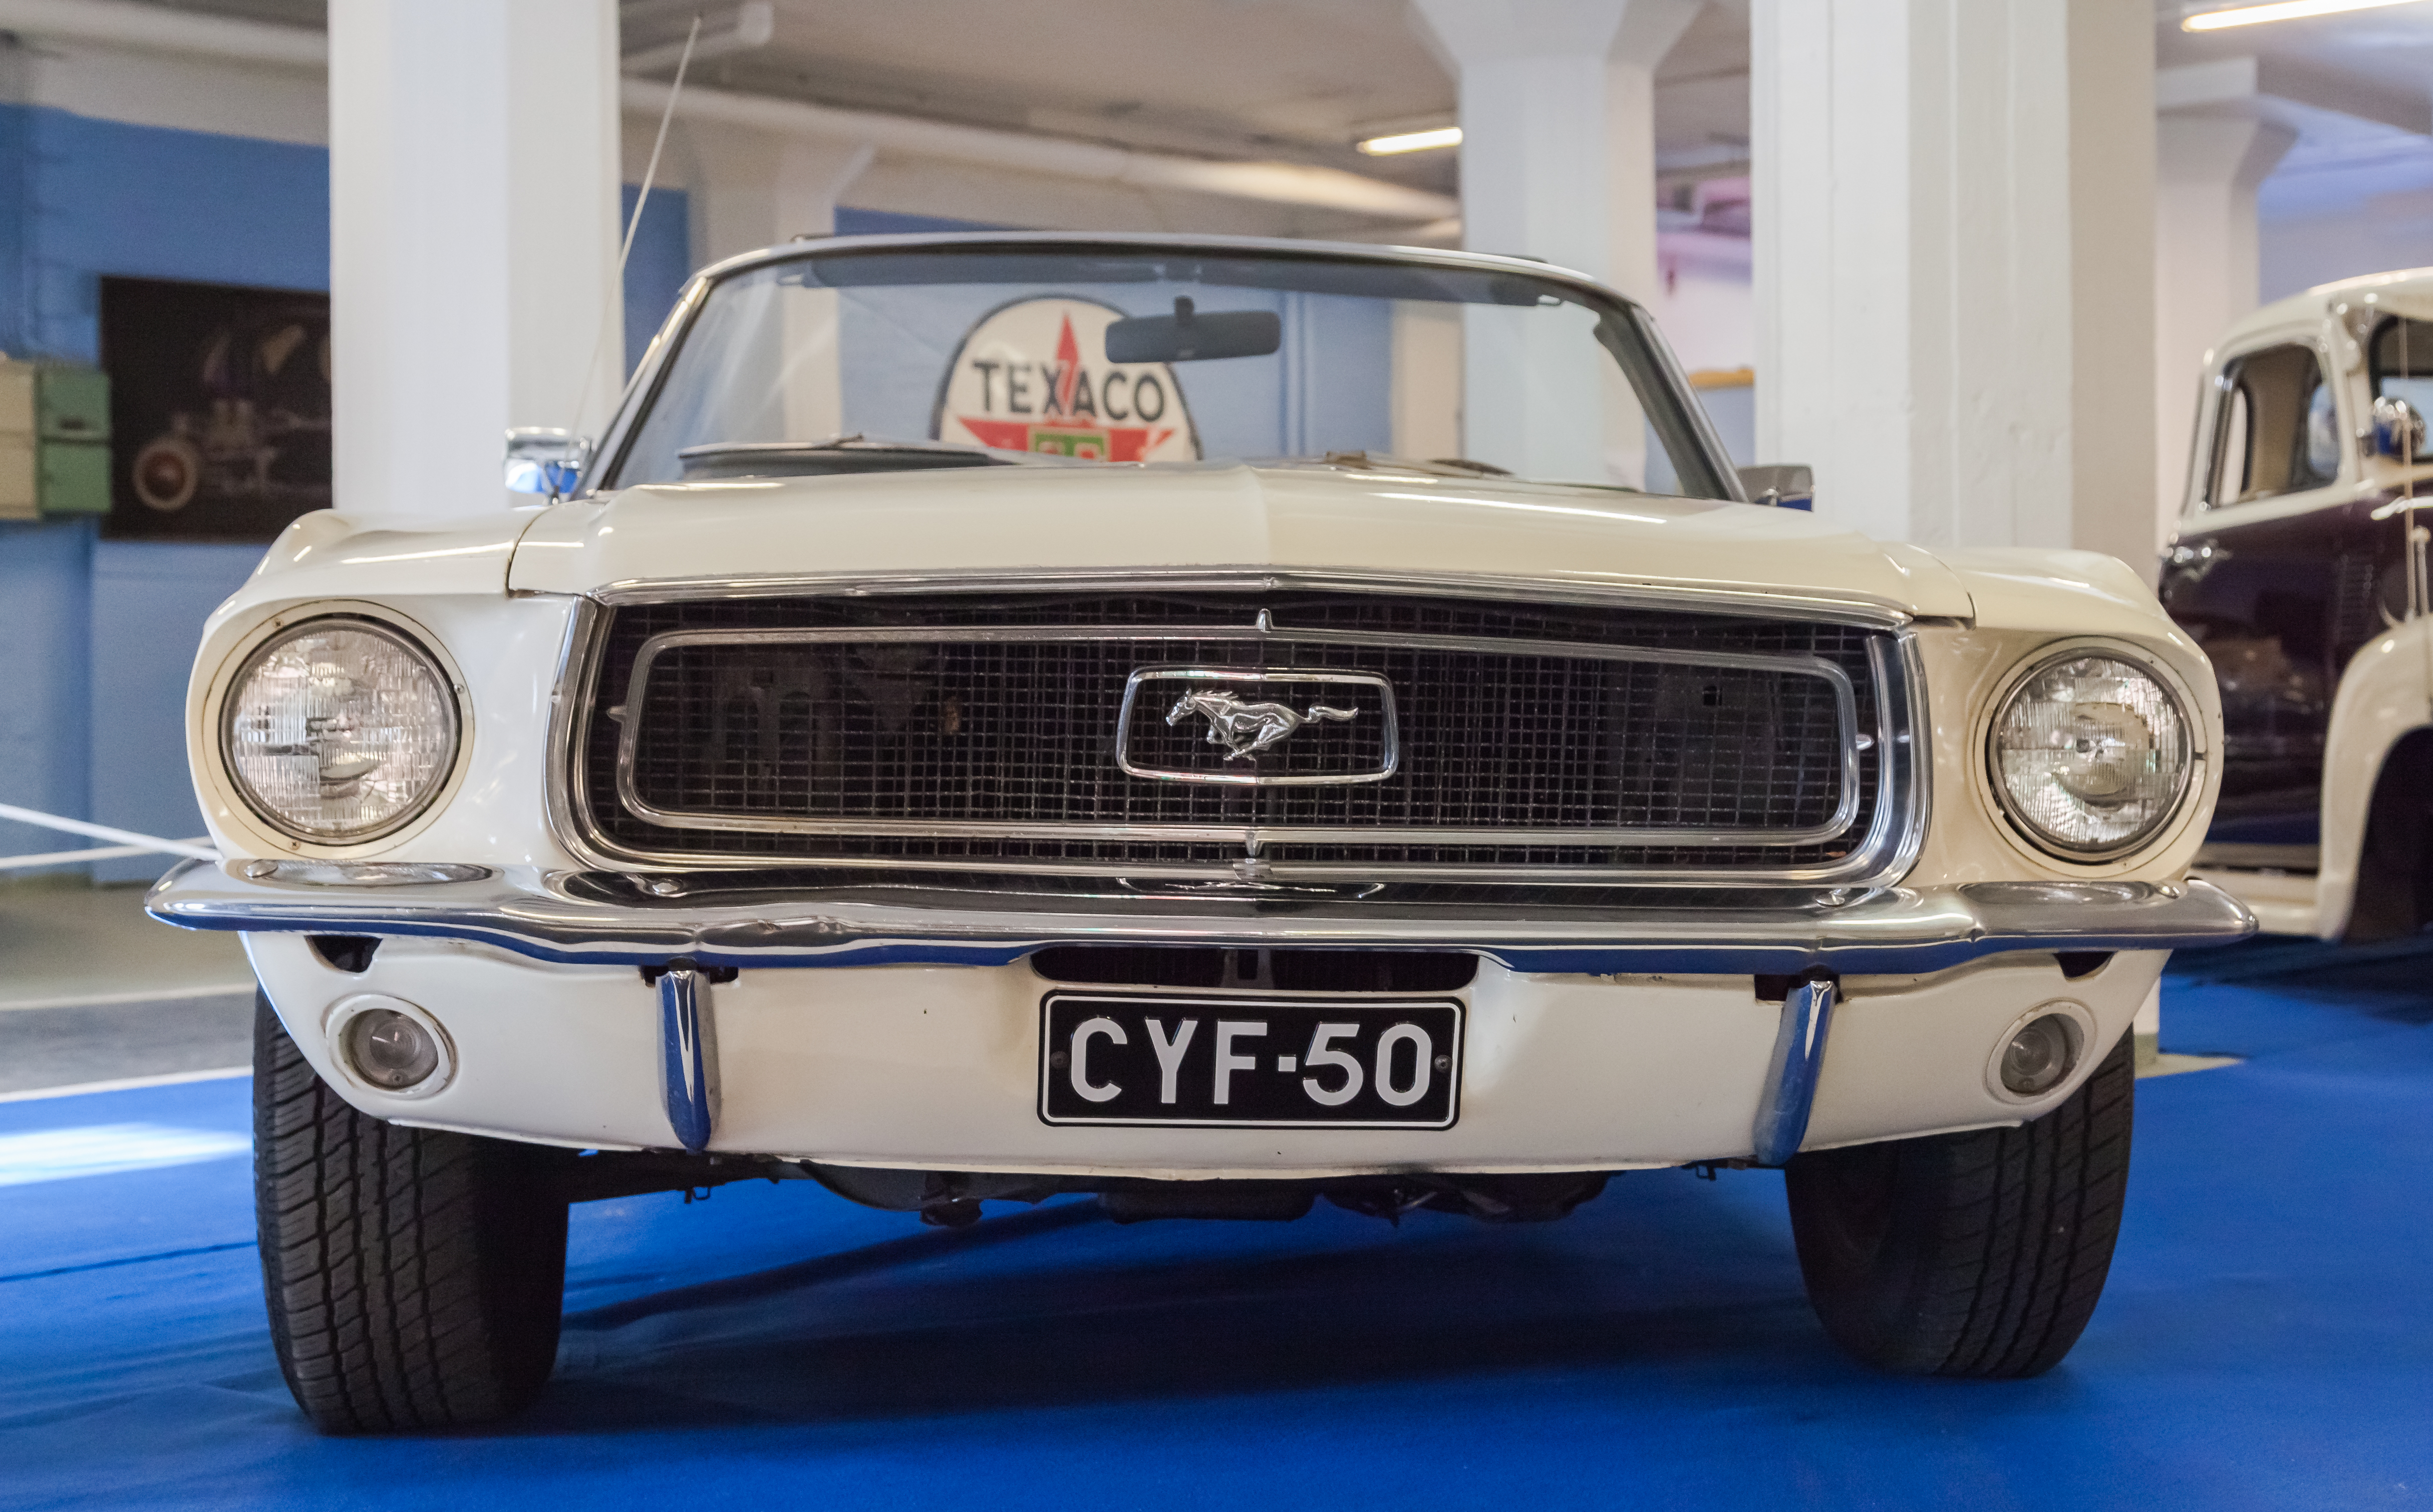 Ford Mustang Convertible de 1968, Helsinki, Finlandia, 2012-08-14, DD 01